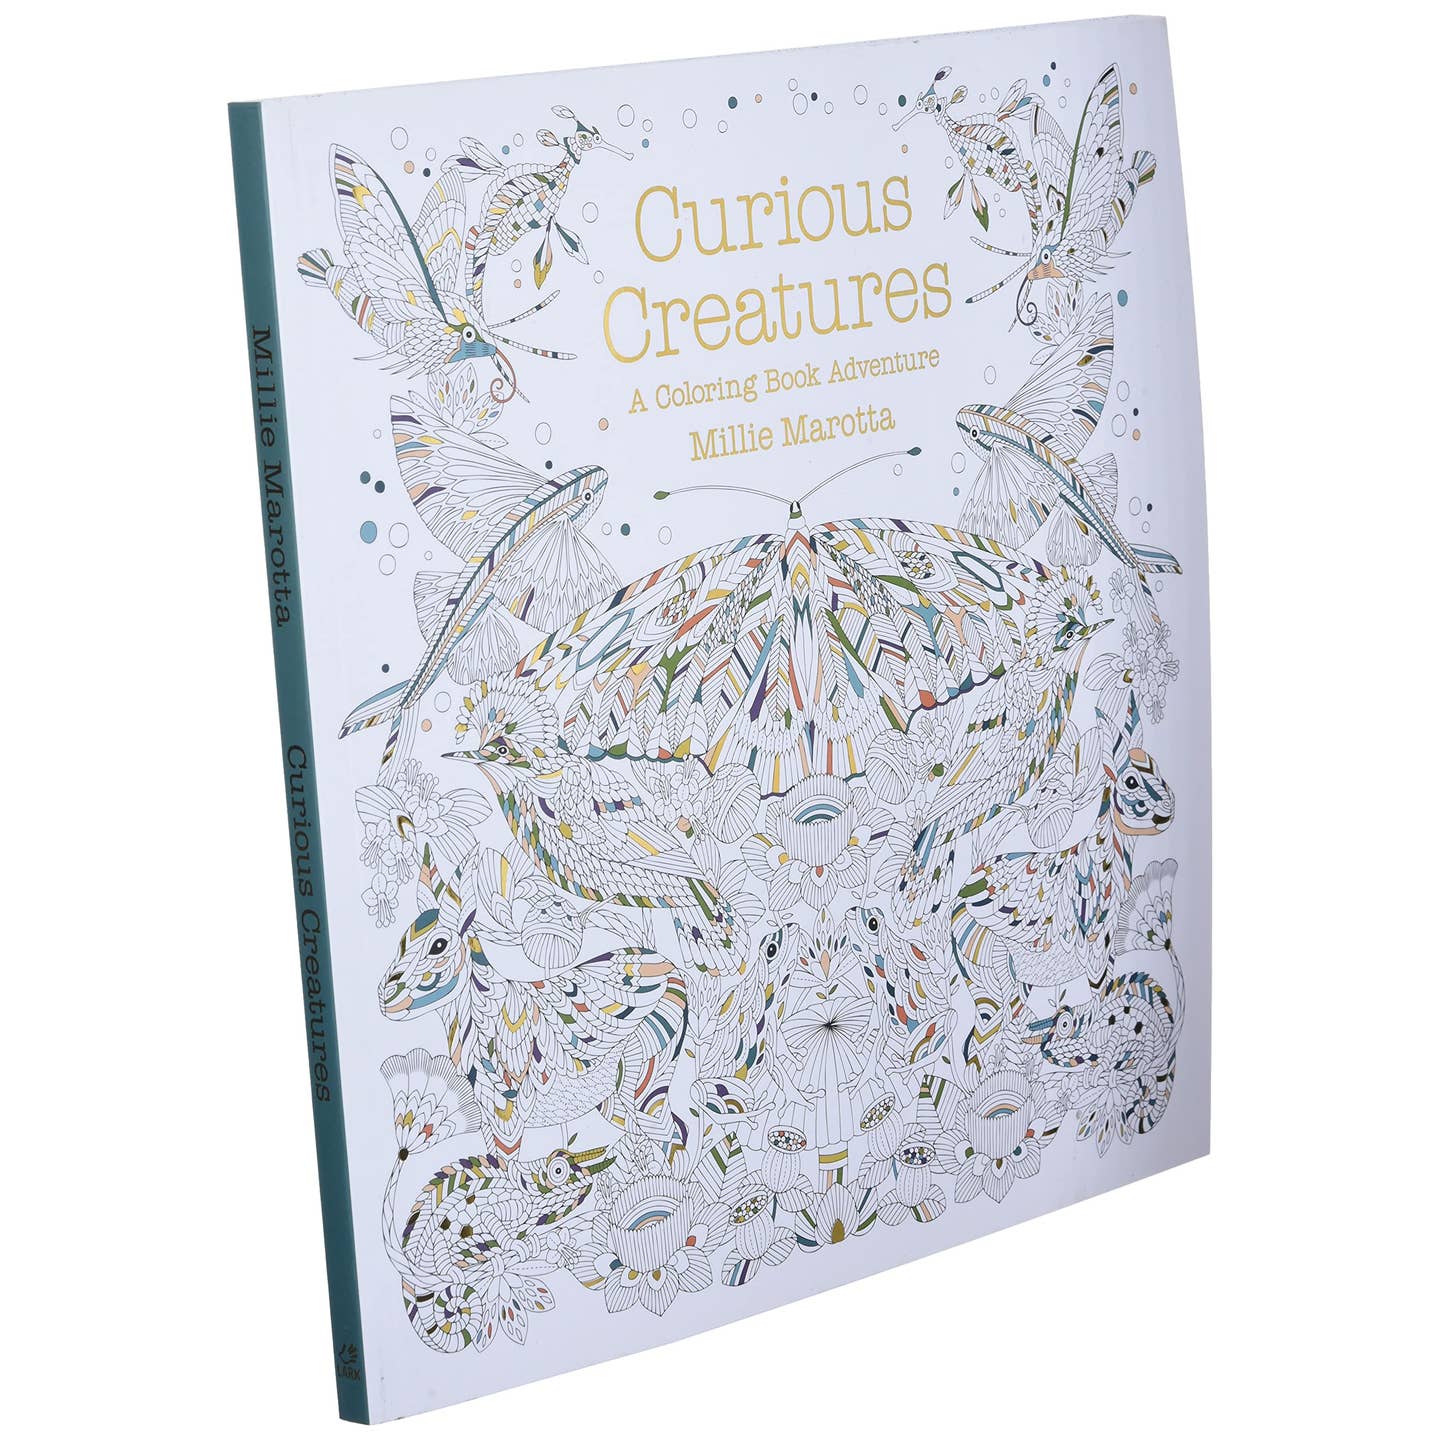 Millie Marotta Curious Creatures Coloring Book